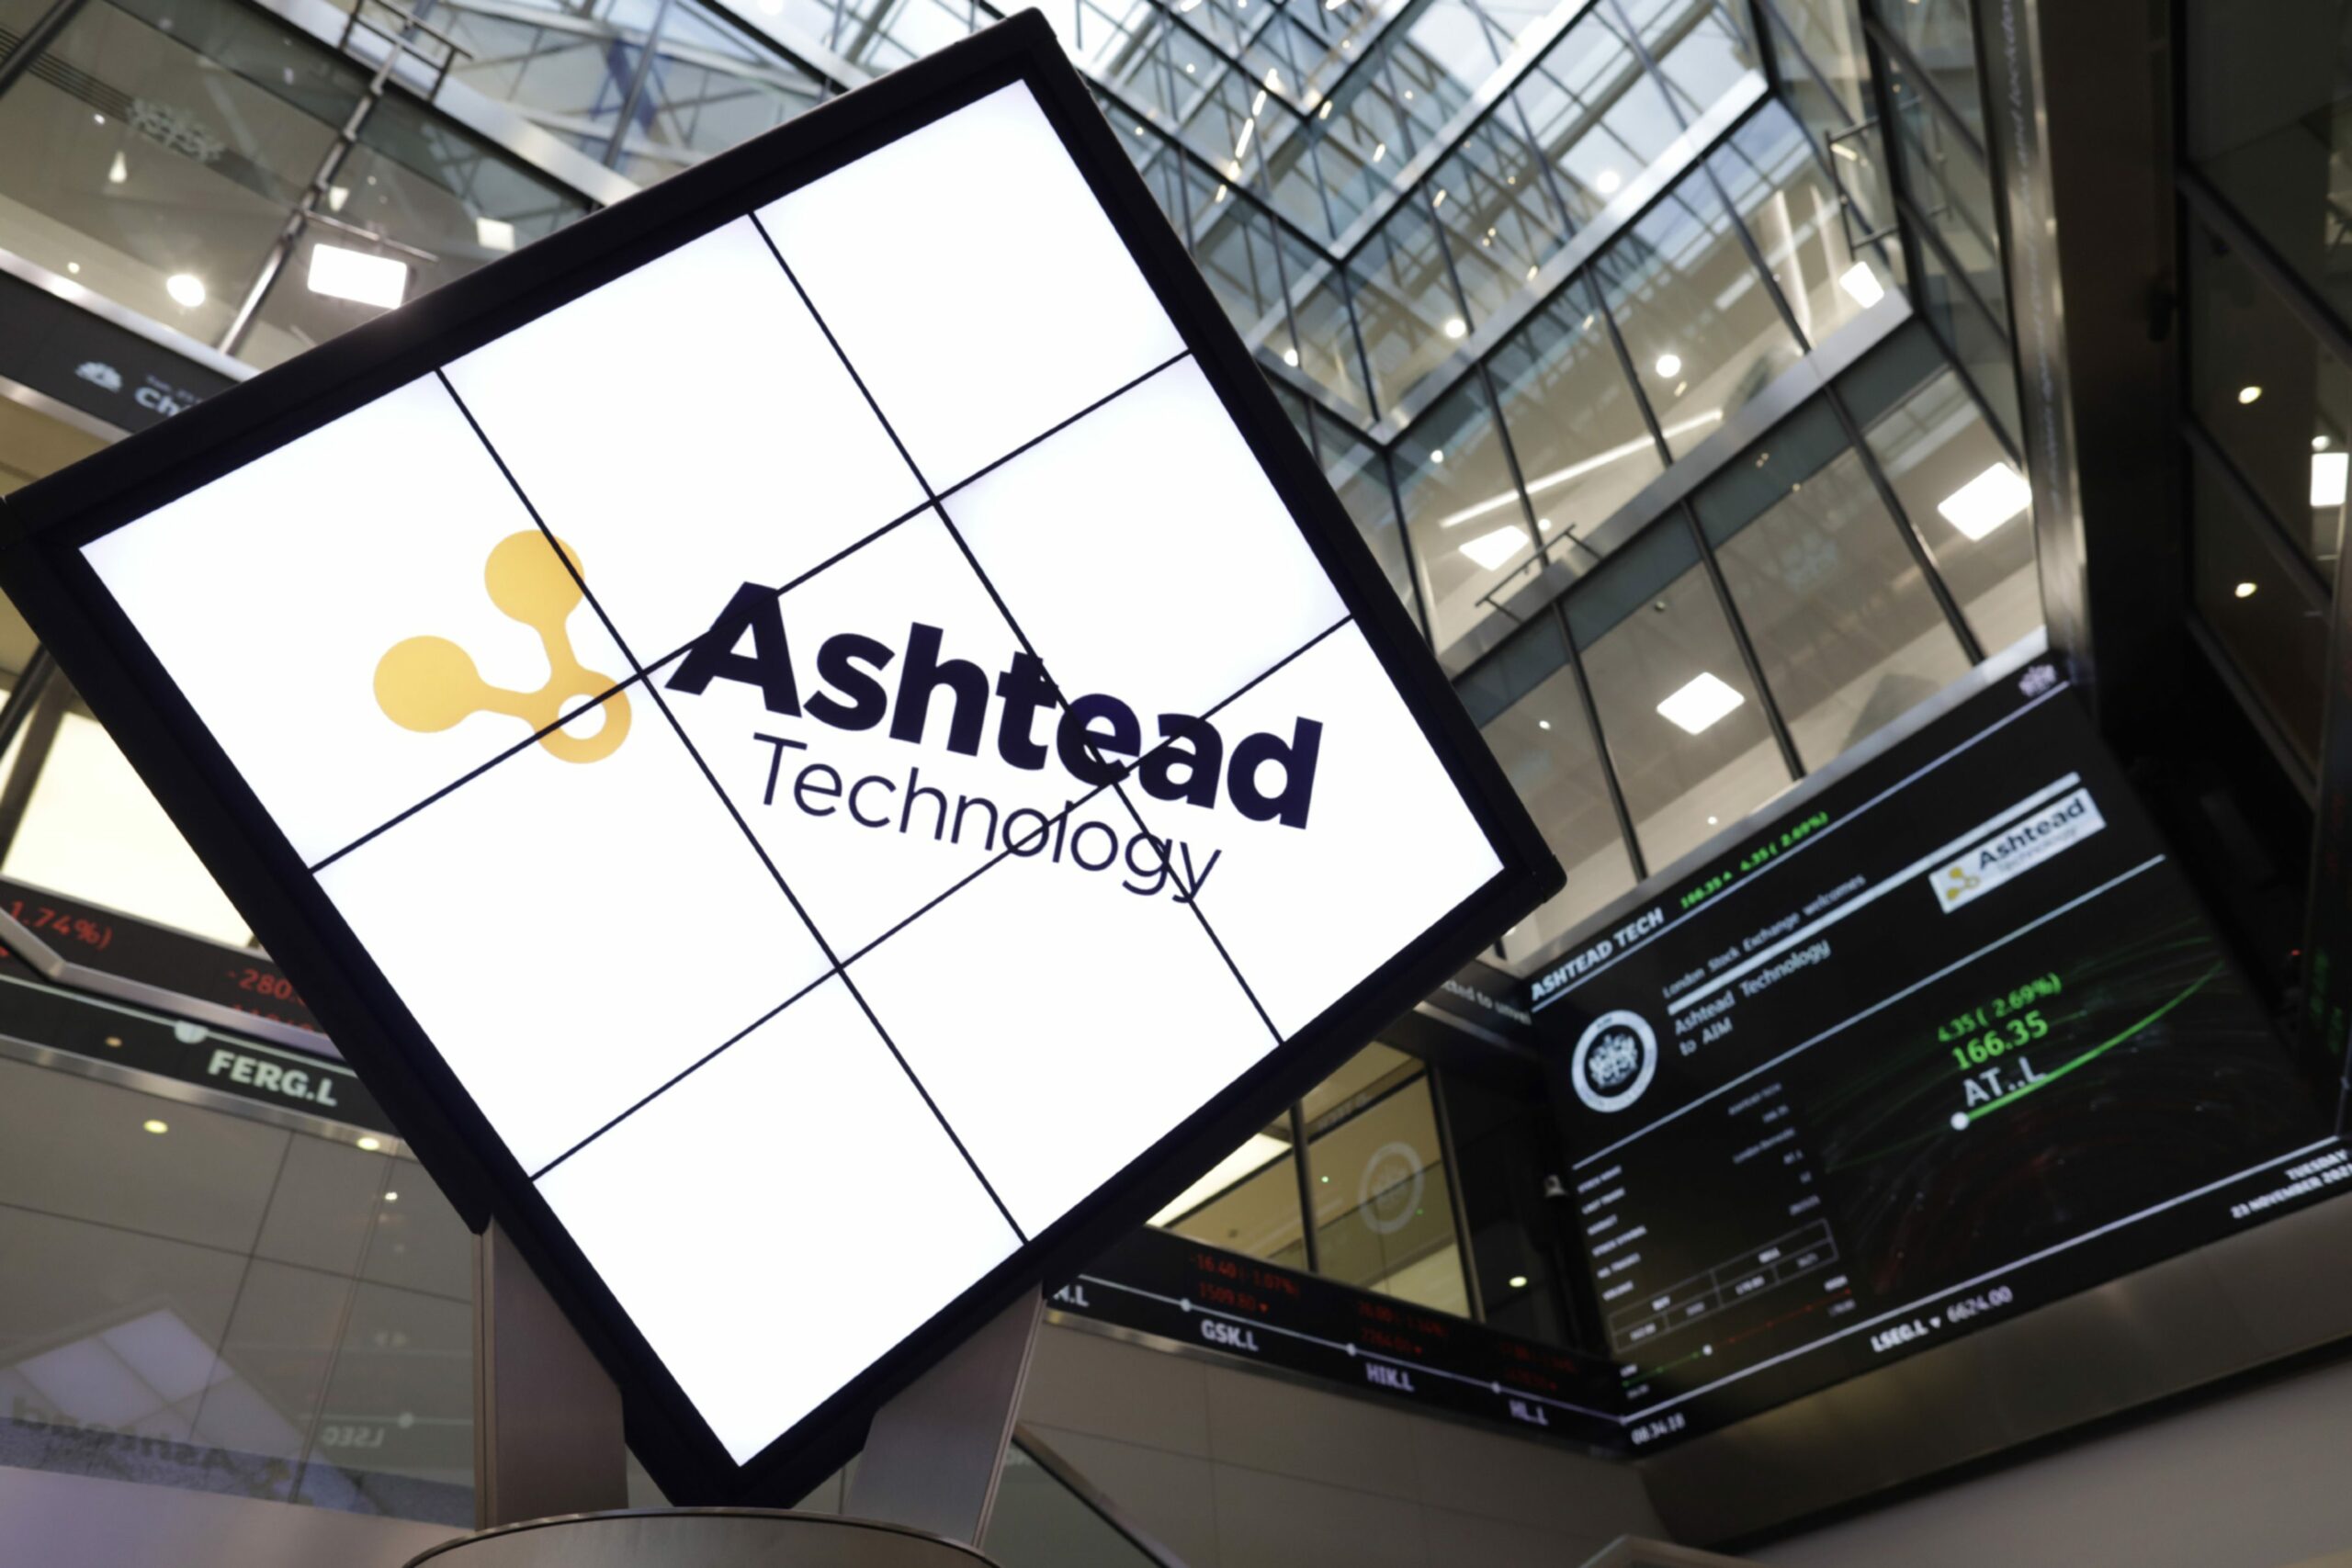 Ashtead Technology predicts 25 bump in revenues